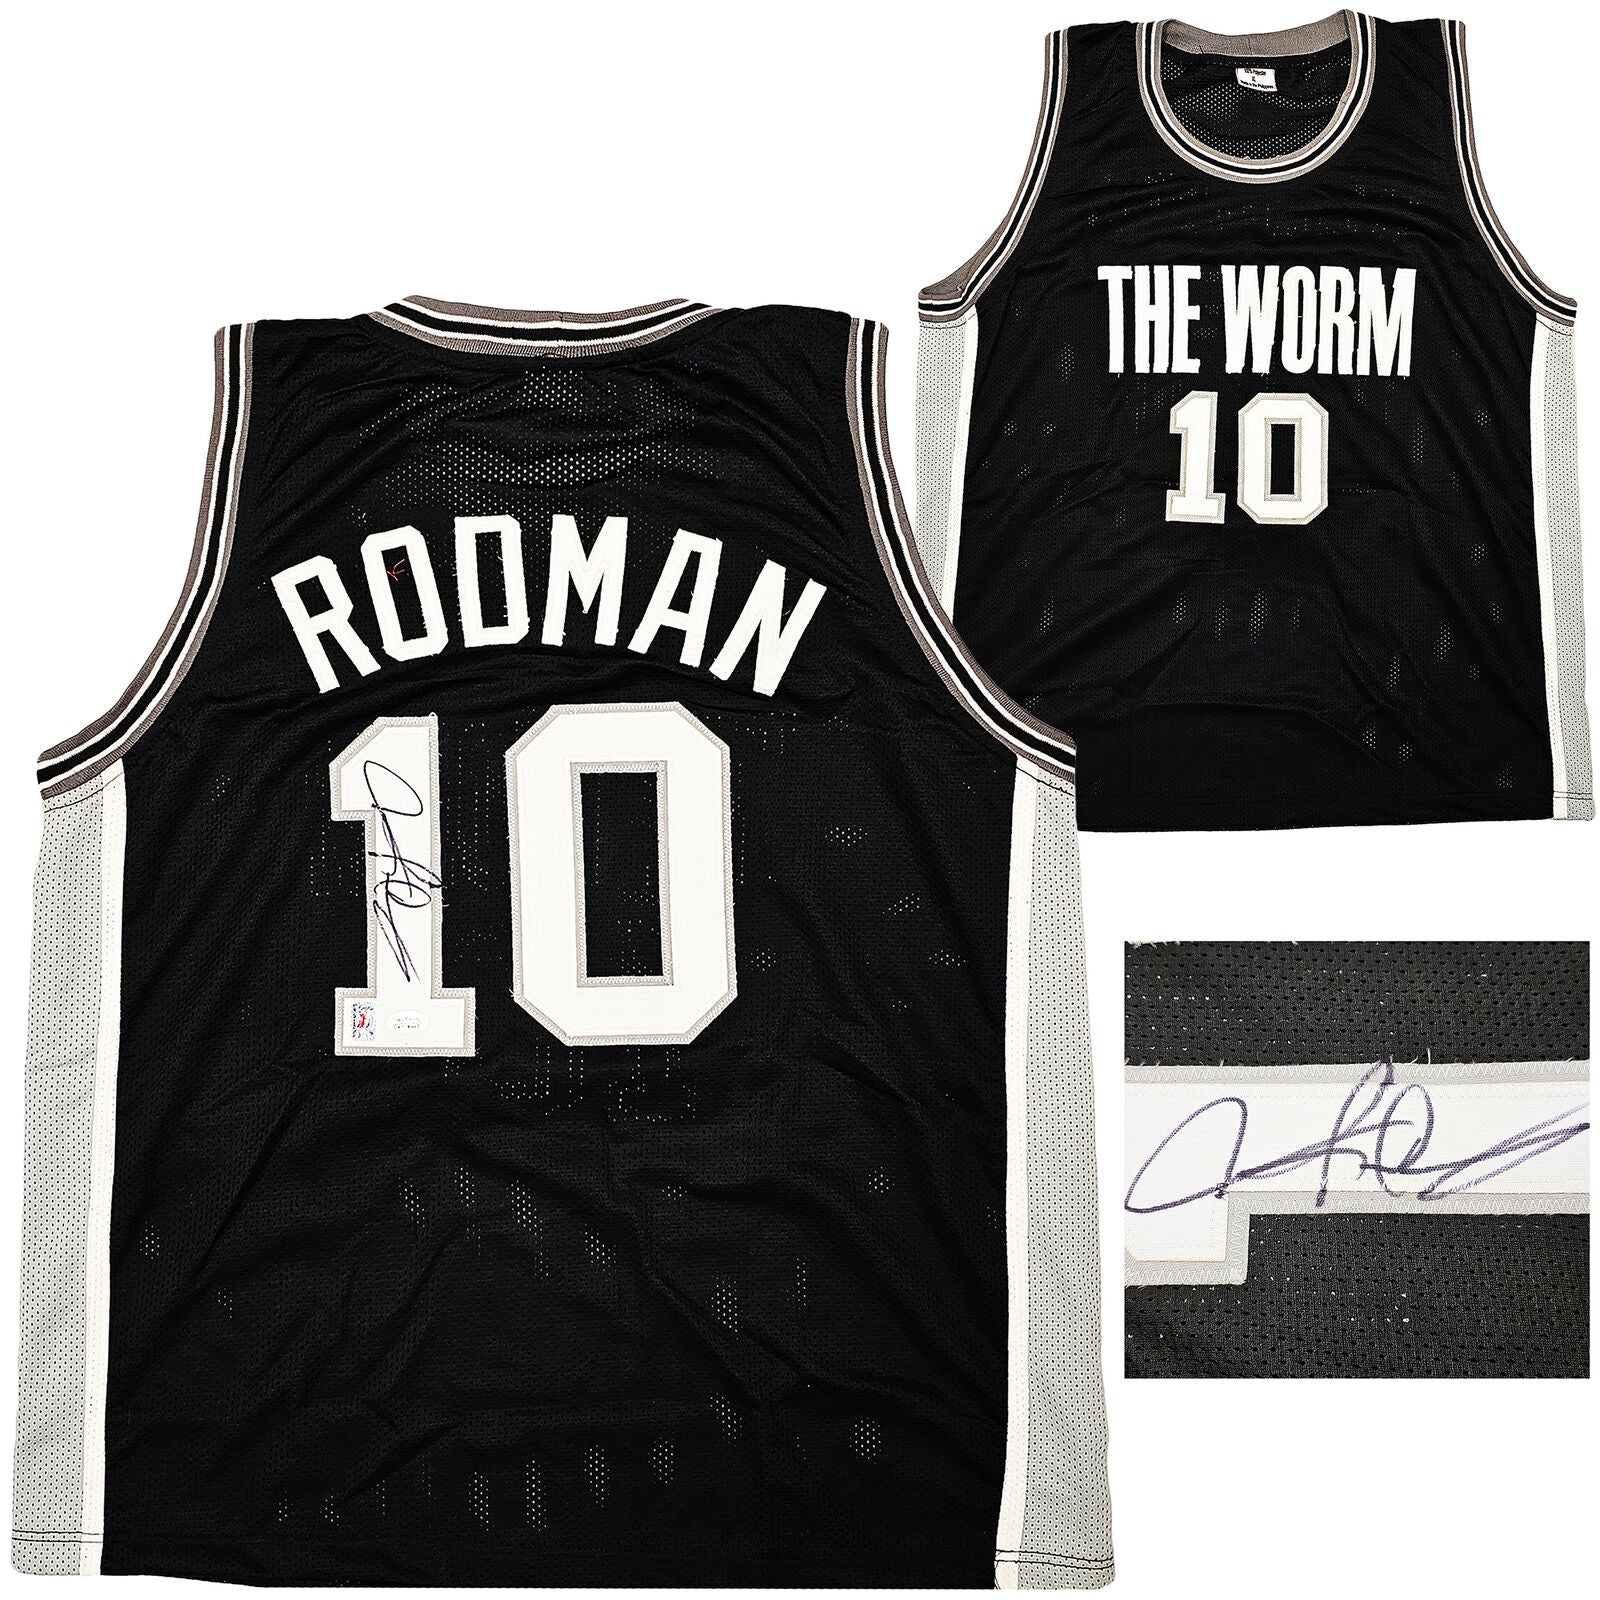 Dennis Rodman Signed Jersey Inscribed The Worm (JSA COA)